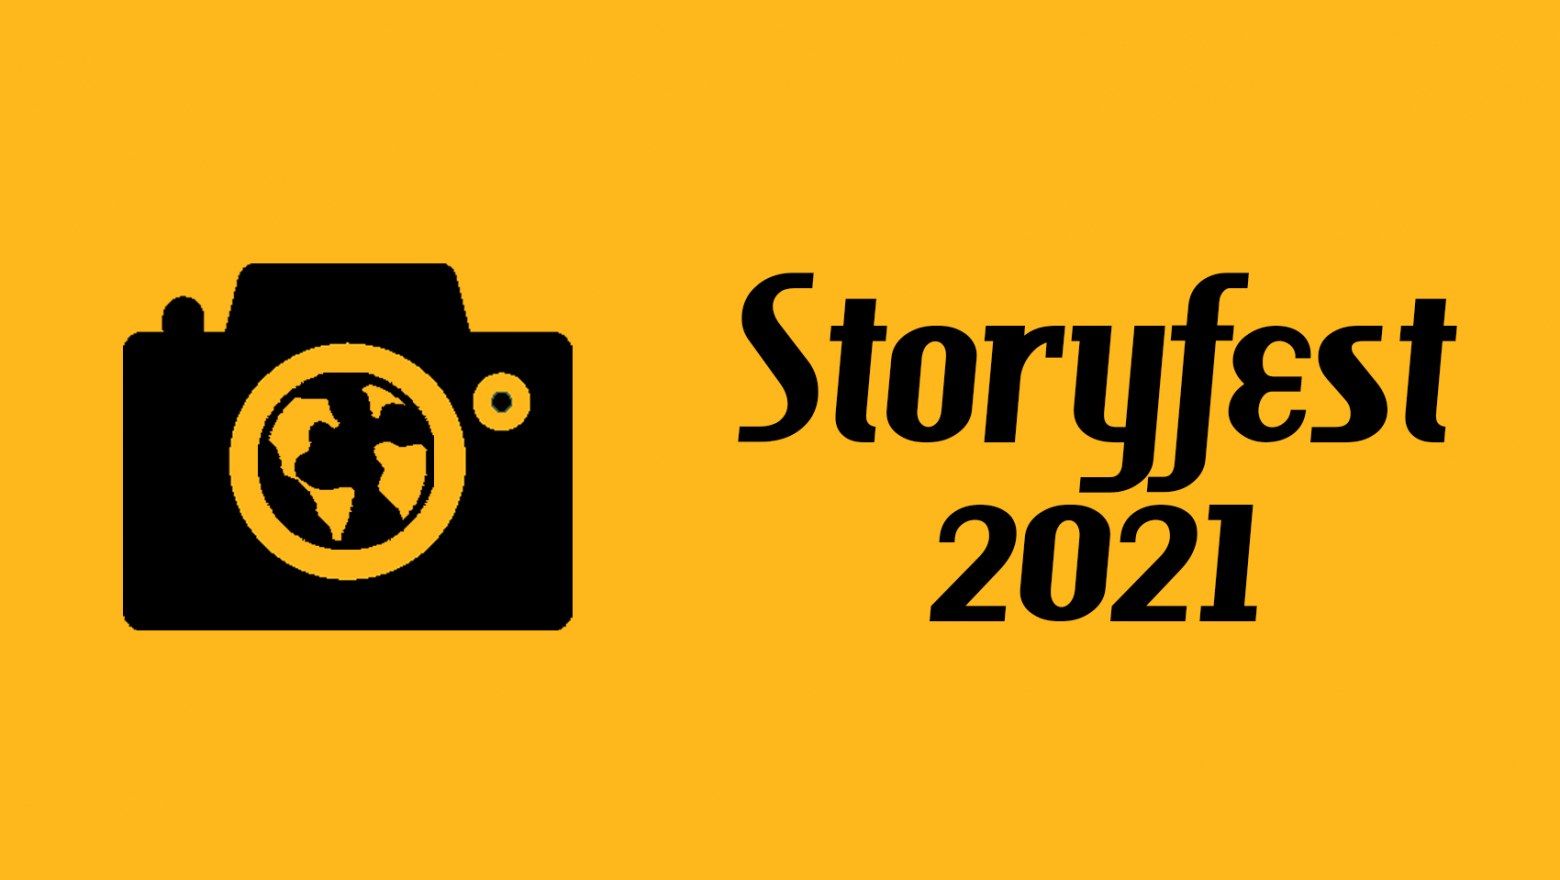 Congratulations, Storyfest 2021 winners!